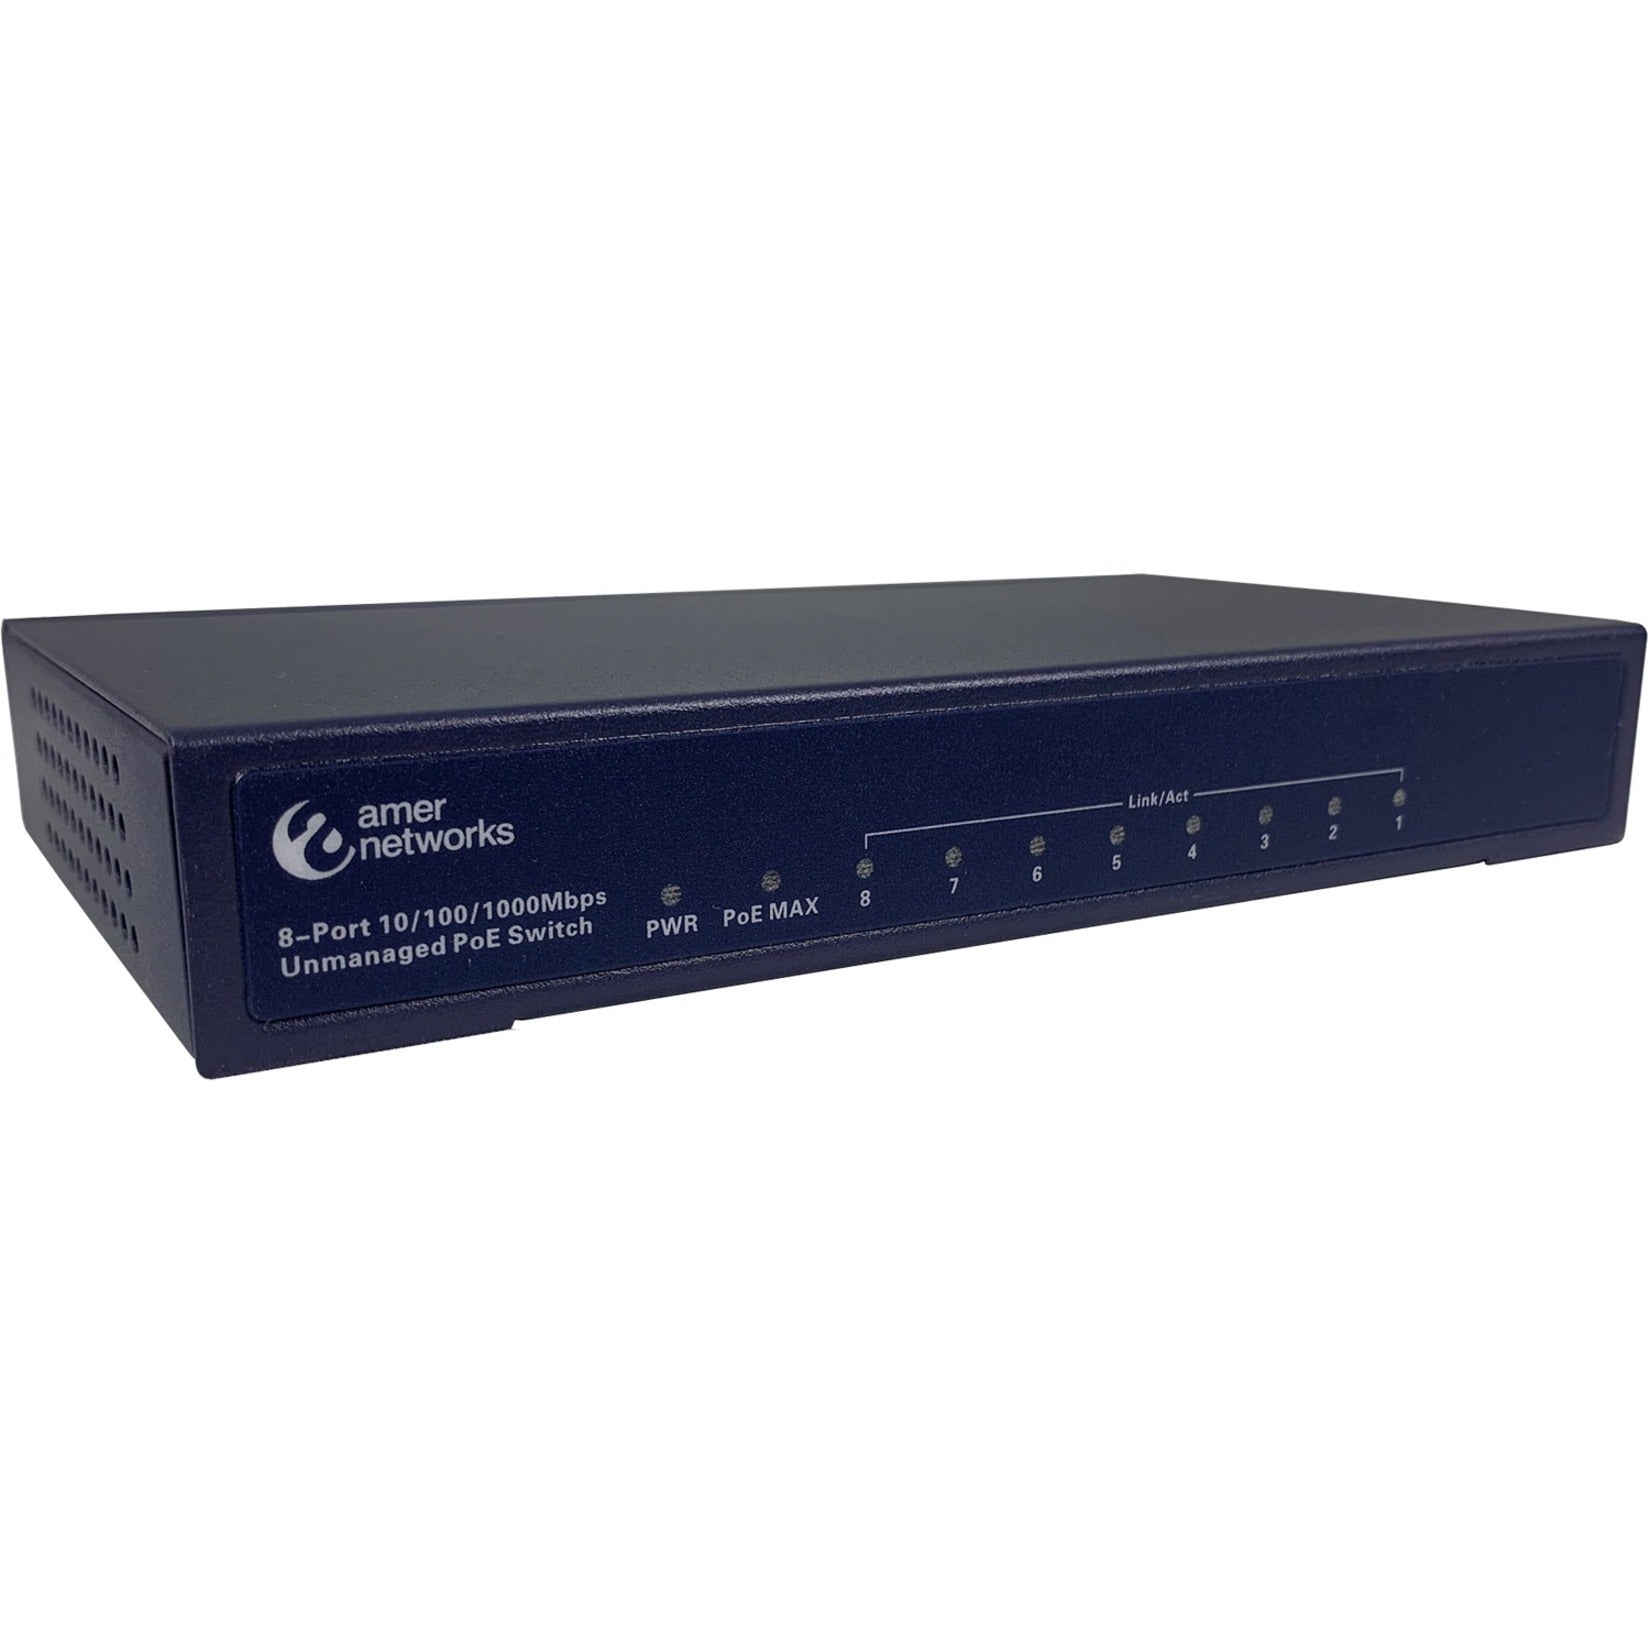 Amer SG8P 8 Port 10/100/1000Mbps Economic PoE Switch, Gigabit Ethernet, Metal Construction